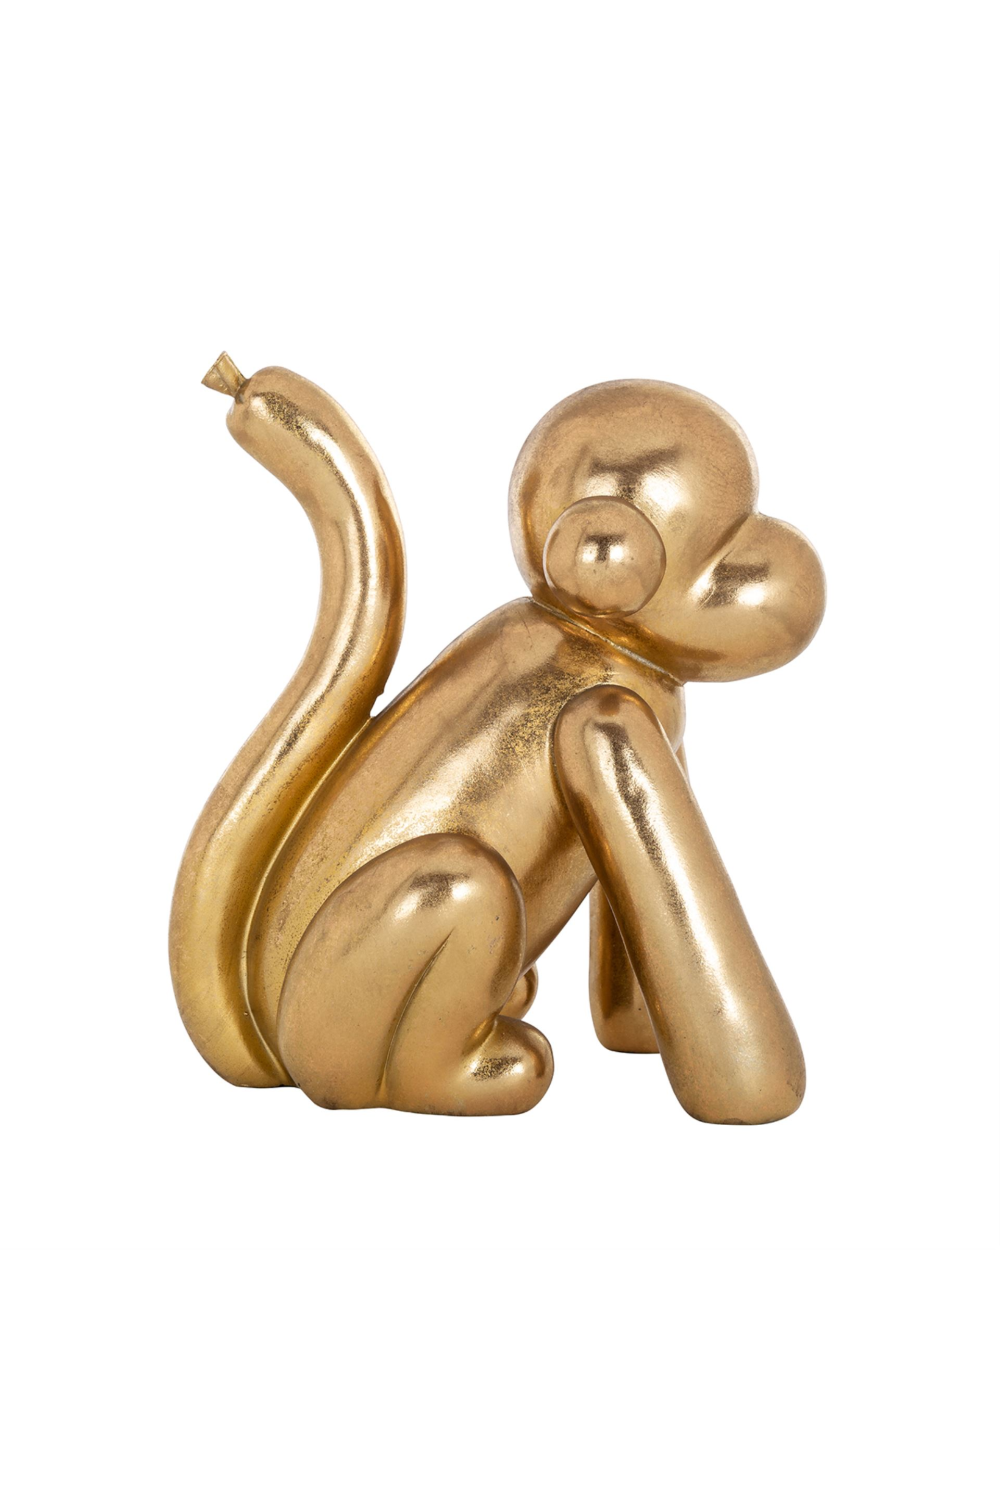 Gold Sculptural Art Decoration | OROA Monkey | Oroa.com